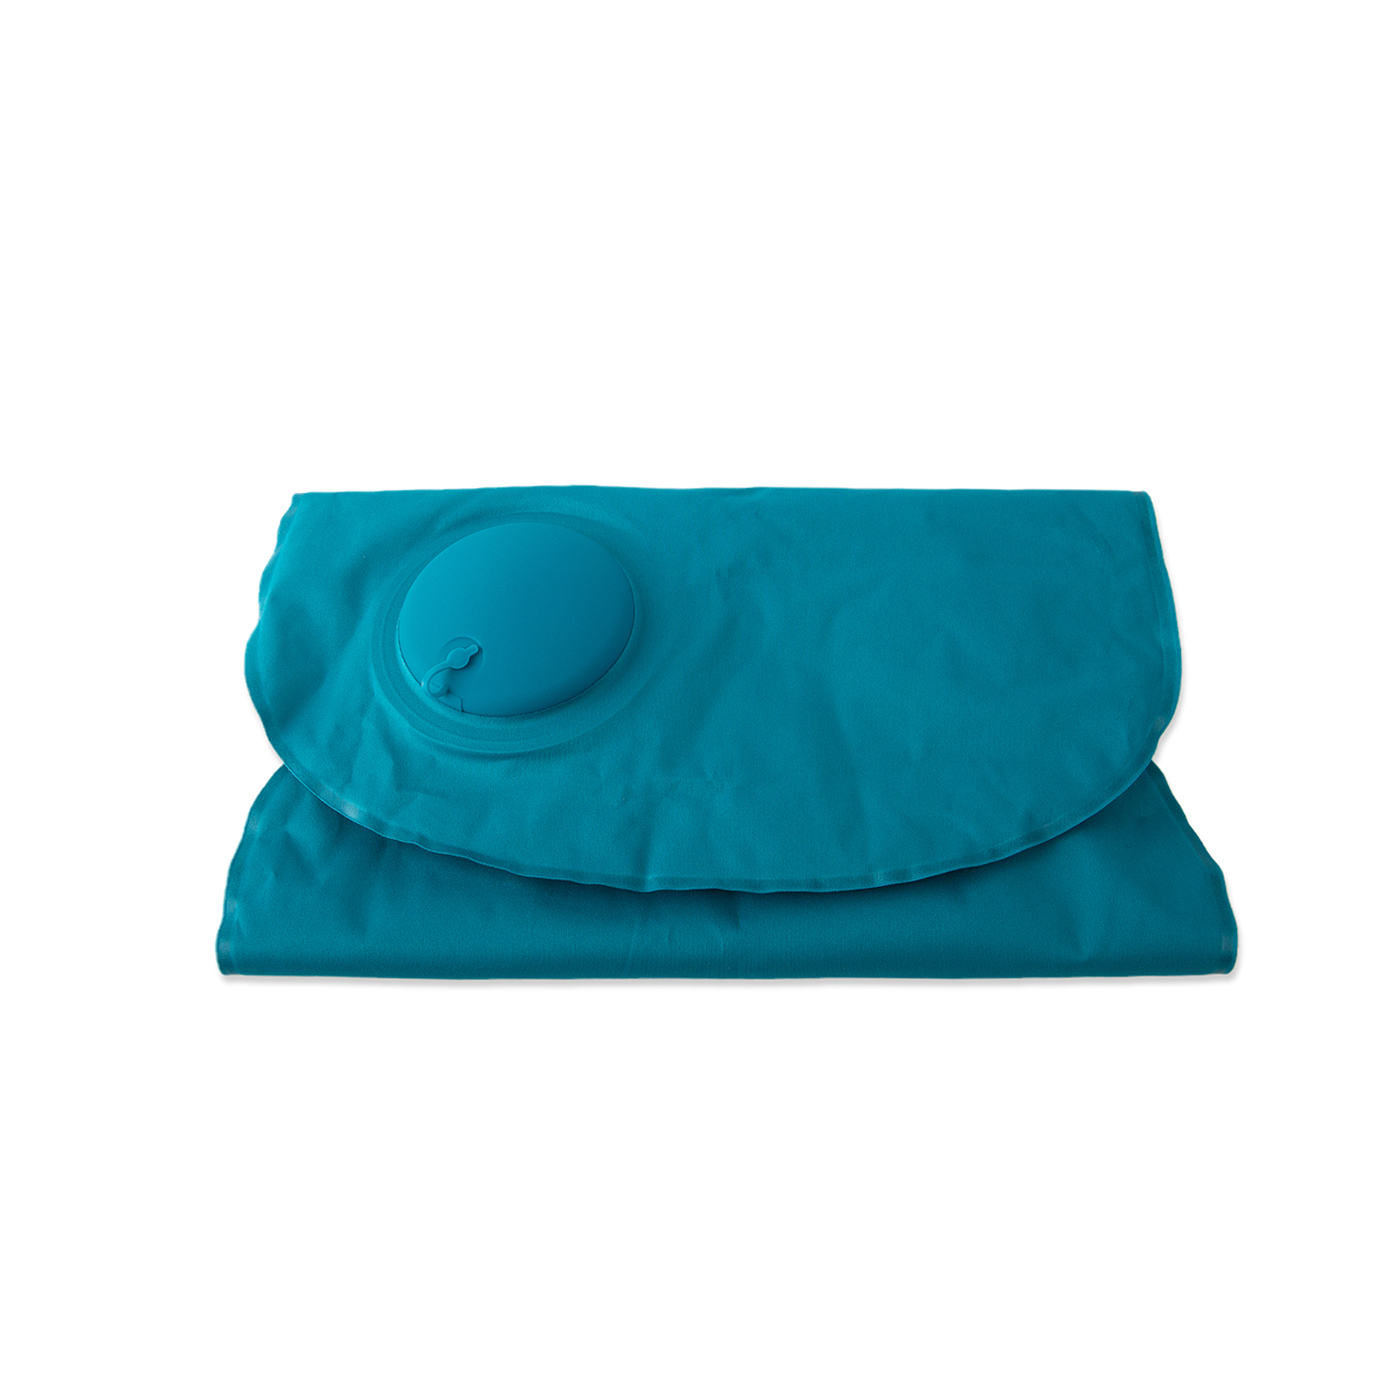 Portable Inflatable TPU Travel Pillow3